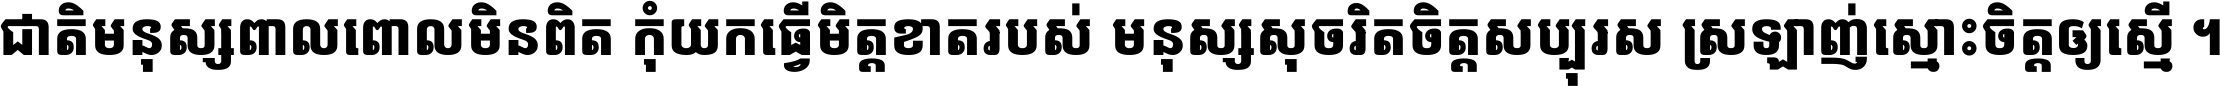 Noto Sans Khmer Condensed Black